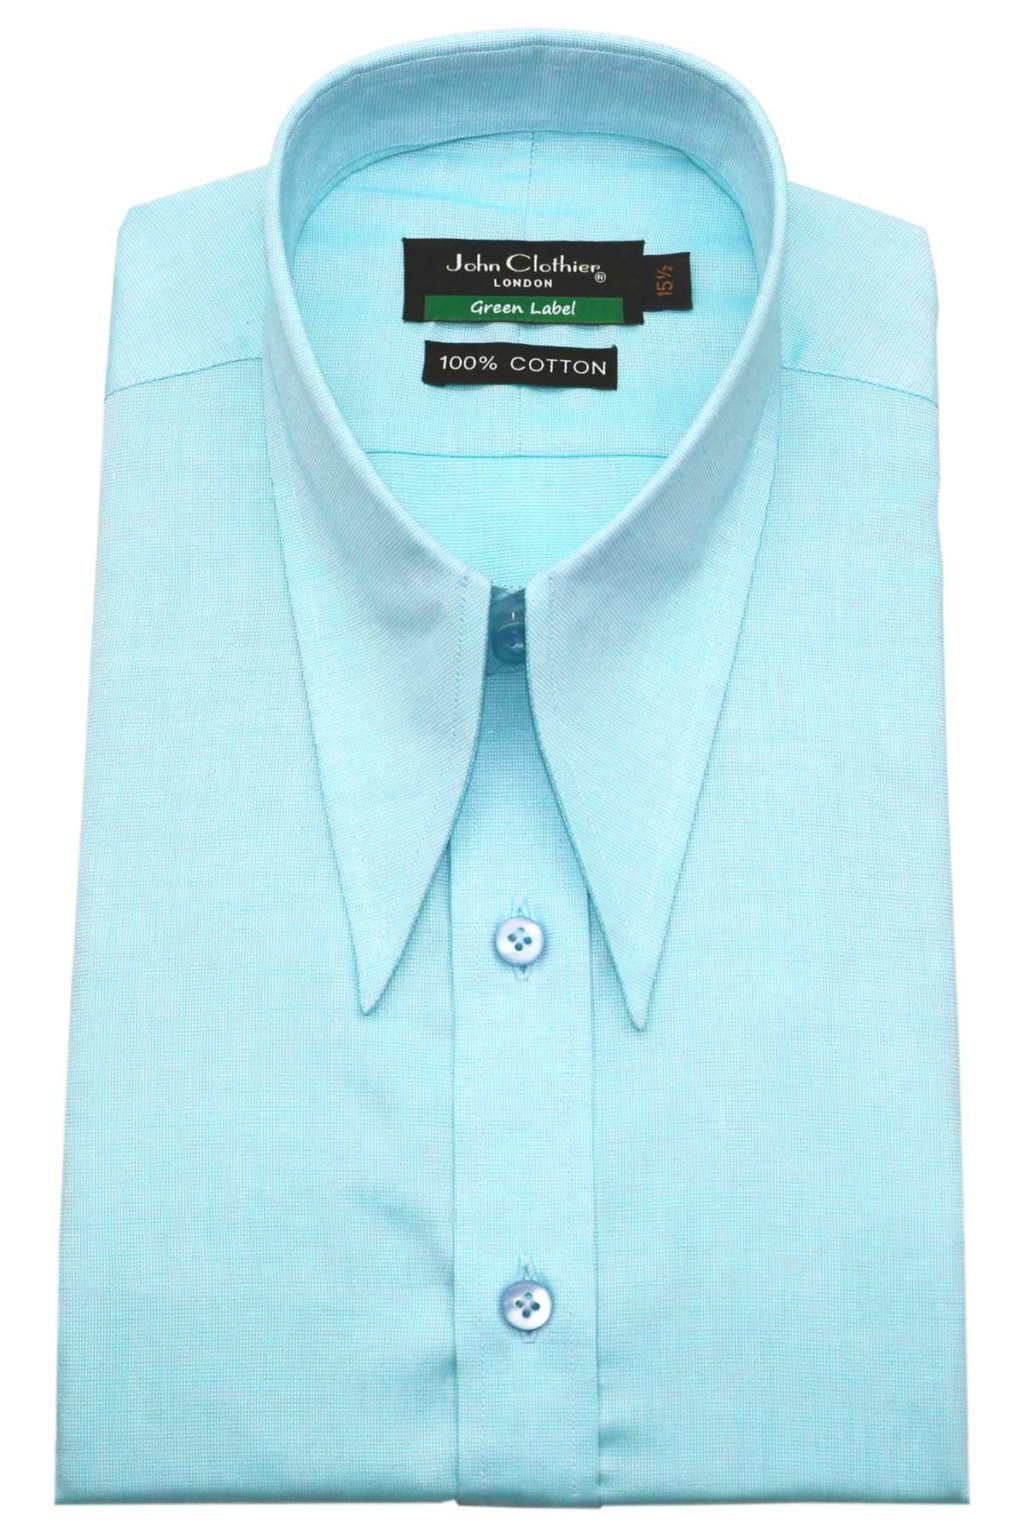 Sea Blue Spearpoint Collar Shirt - John Clothier London Online